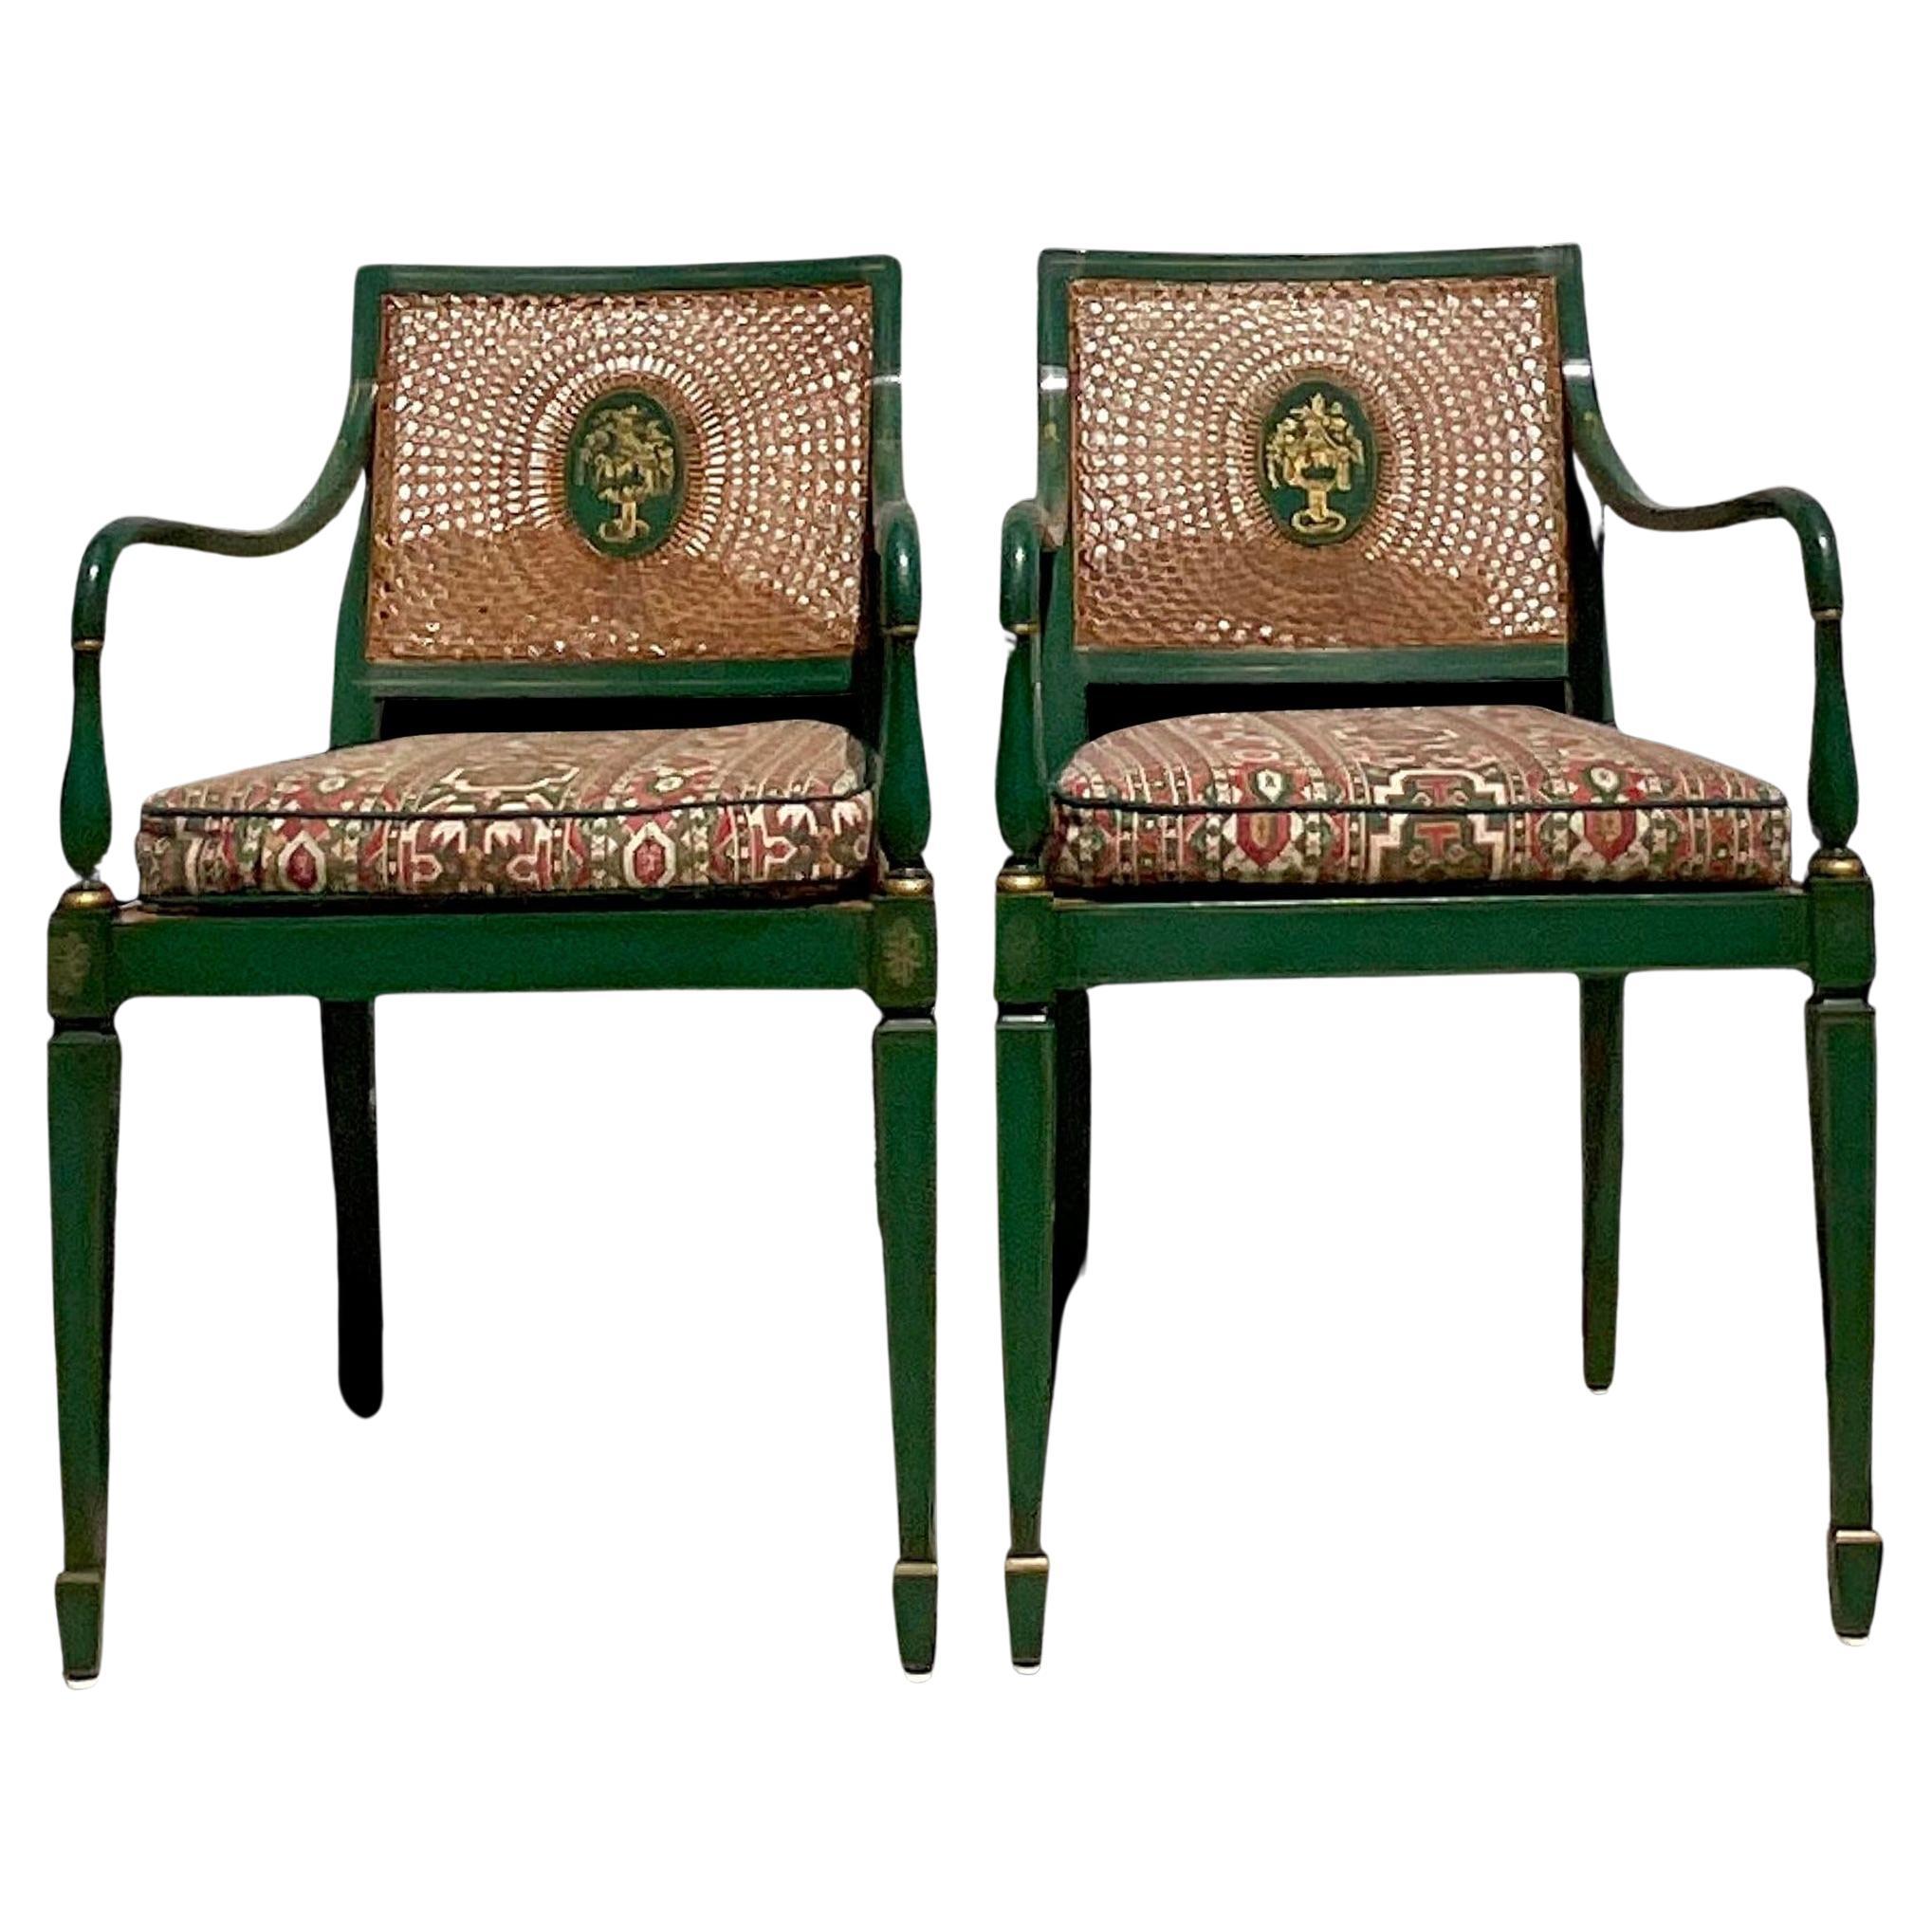 Vintage Regency Carver Cane Chairs - ein Paar